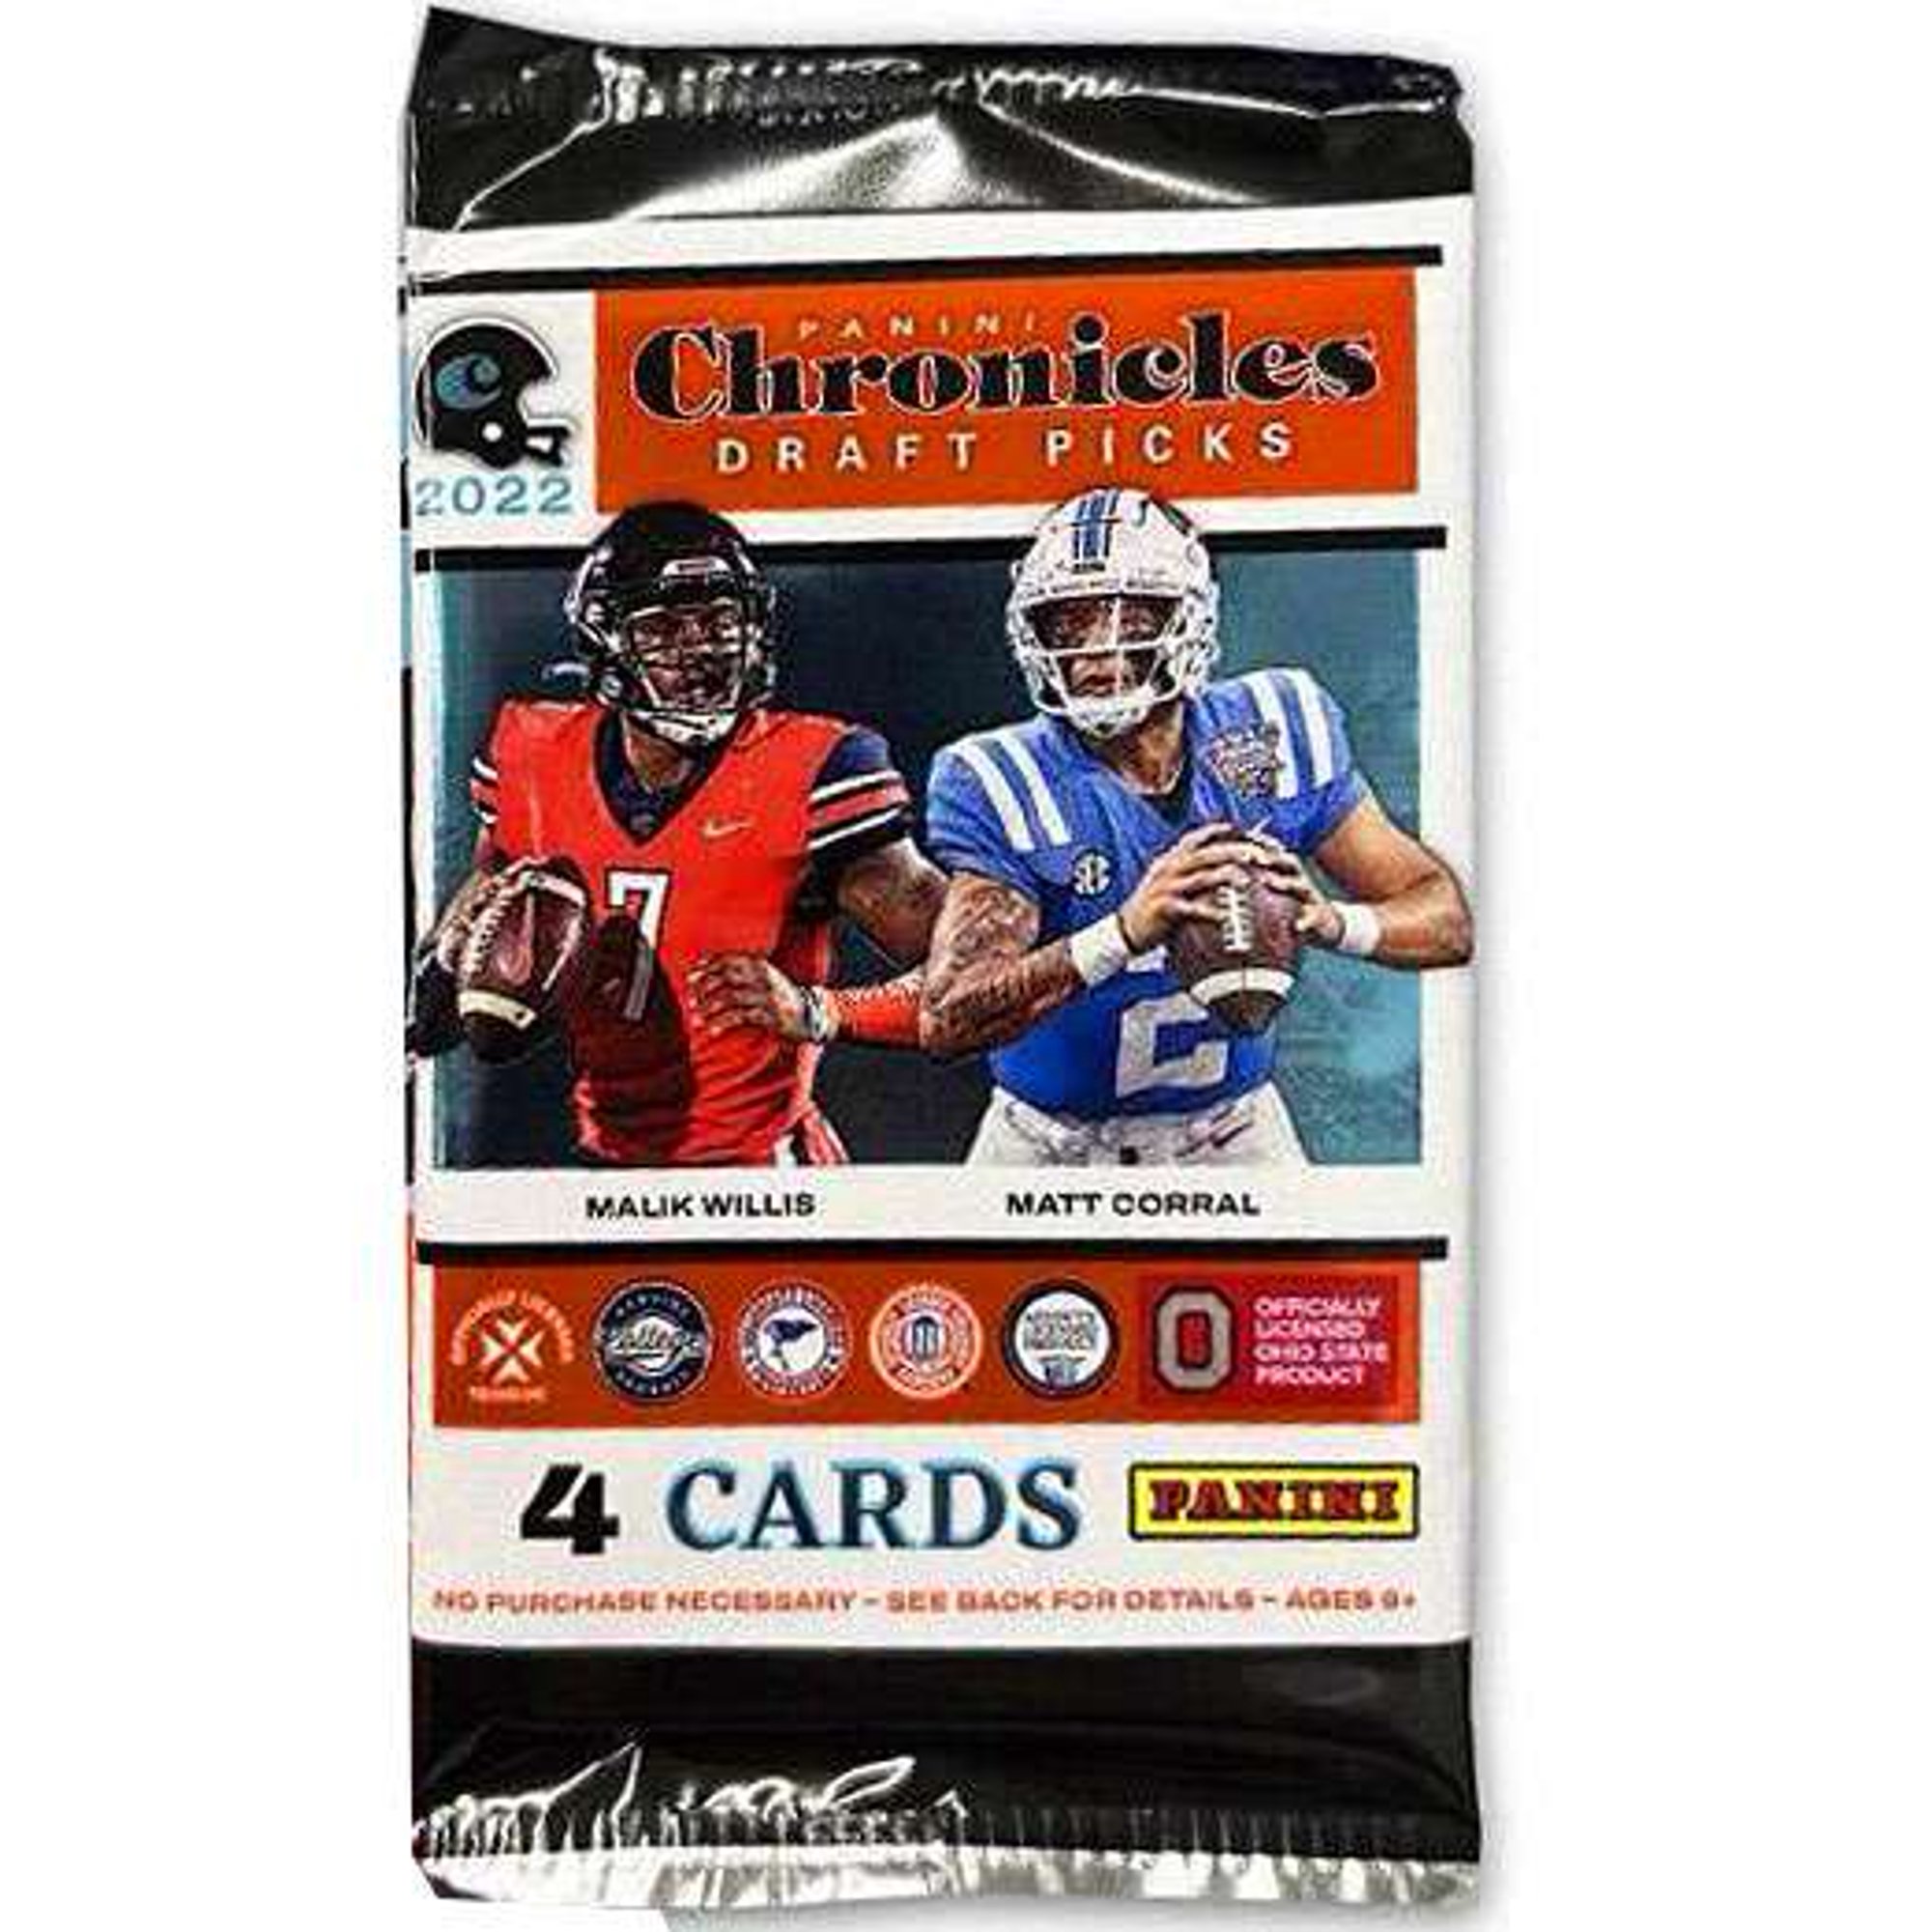 NFL Panini 2022 Chronicles Draft Picks Football Trading Card